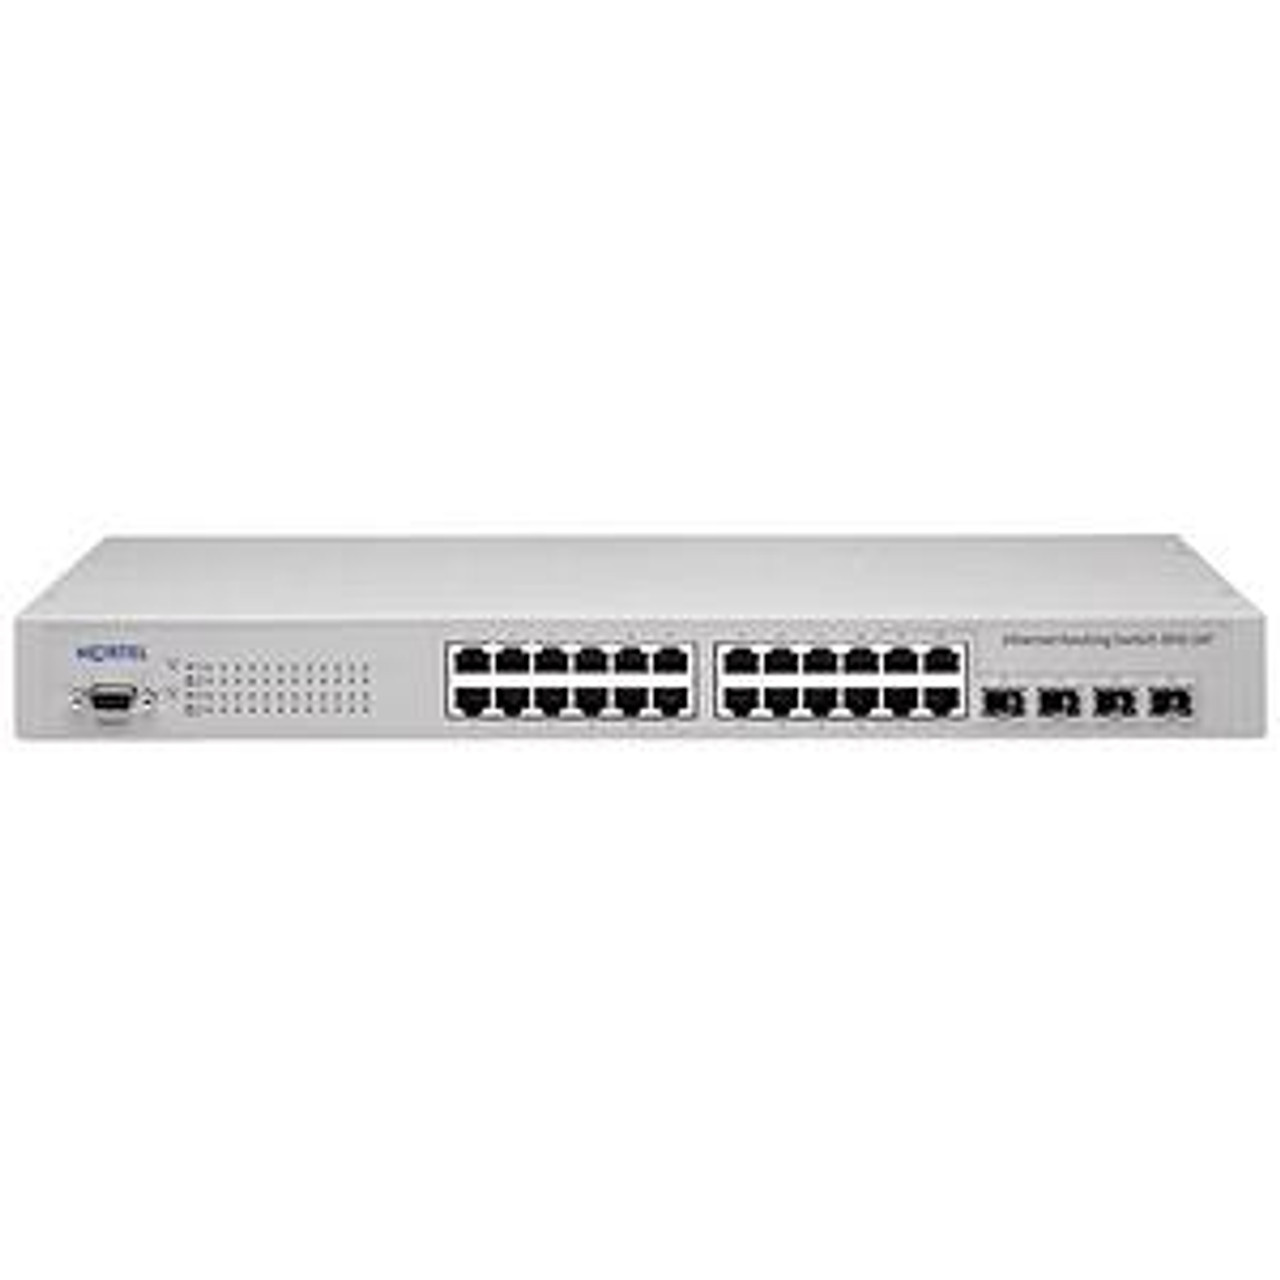 AL1001A08-E5 Nortel Gigabit Ethernet Routing Switch 3510-24T with 24-Ports 10/100/1000 Ports plus 4 fiber mini-GBIC Ports (Refurbished)